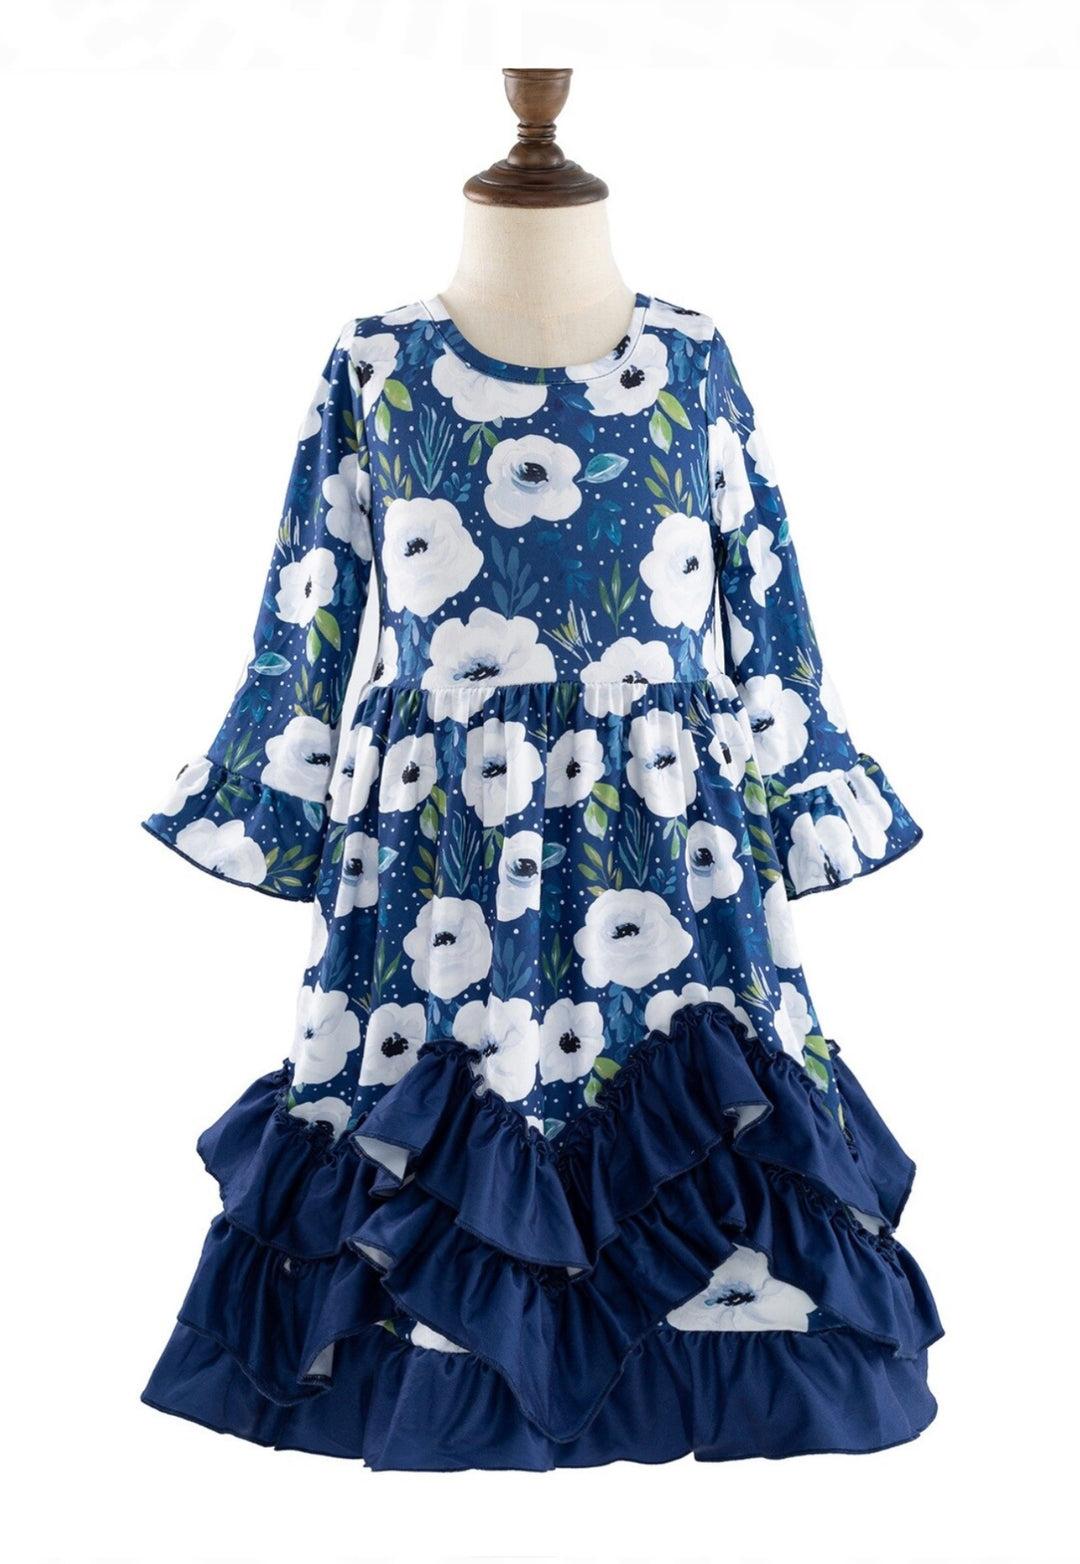 Indigo Blue Poppy Girl's Ruffled Dress Long Maxi Dress Blue